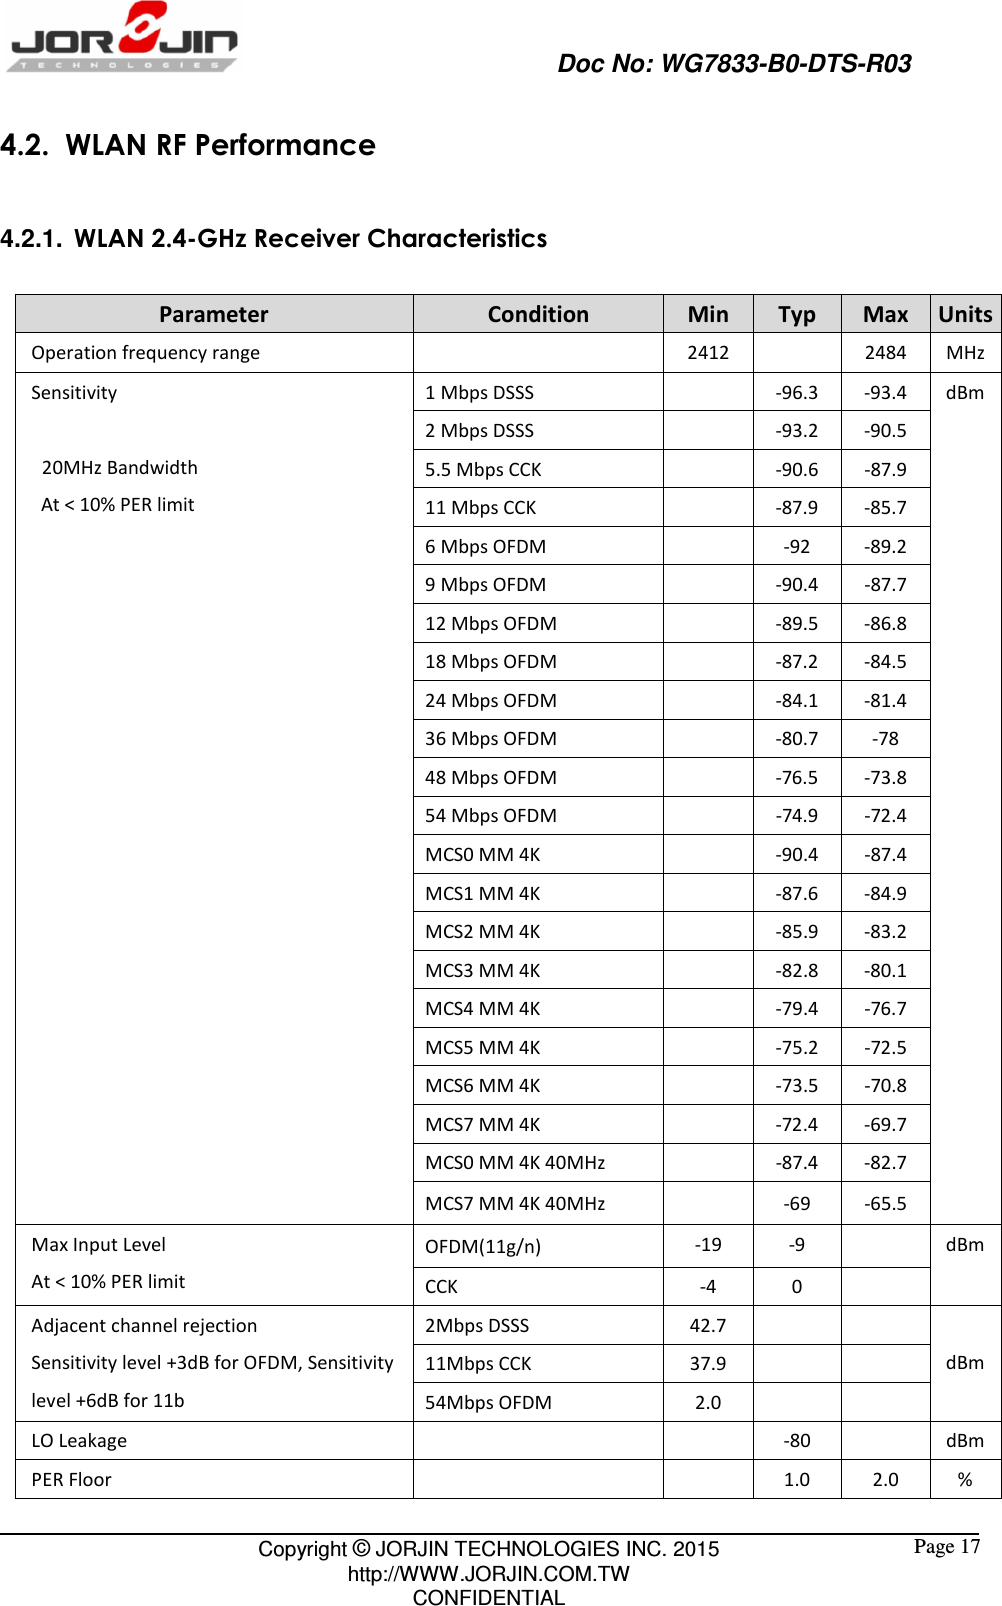                                                   Doc No: WG7833-B0-DTS-R03                                                                                                 Copyright © JORJIN TECHNOLOGIES INC. 2015 http://WWW.JORJIN.COM.TW CONFIDENTIAL  Page 17 4.2.   WLAN RF Performance 4.2.1.  WLAN 2.4-GHz Receiver Characteristics Parameter  Condition  Min  Typ  Max  Units Operation frequency range      2412    2484  MHz Sensitivity   20MHz Bandwidth  At &lt; 10% PER limit 1 Mbps DSSS      -96.3  -93.4  dBm 2 Mbps DSSS      -93.2  -90.5 5.5 Mbps CCK    -90.6  -87.9 11 Mbps CCK    -87.9  -85.7 6 Mbps OFDM      -92  -89.2 9 Mbps OFDM      -90.4  -87.7 12 Mbps OFDM    -89.5  -86.8 18 Mbps OFDM      -87.2  -84.5 24 Mbps OFDM      -84.1  -81.4 36 Mbps OFDM      -80.7  -78 48 Mbps OFDM      -76.5  -73.8 54 Mbps OFDM    -74.9  -72.4 MCS0 MM 4K    -90.4  -87.4 MCS1 MM 4K    -87.6  -84.9 MCS2 MM 4K    -85.9  -83.2 MCS3 MM 4K    -82.8  -80.1 MCS4 MM 4K    -79.4  -76.7 MCS5 MM 4K    -75.2  -72.5 MCS6 MM 4K    -73.5  -70.8 MCS7 MM 4K    -72.4  -69.7 MCS0 MM 4K 40MHz    -87.4  -82.7 MCS7 MM 4K 40MHz   -69  -65.5 Max Input Level At &lt; 10% PER limit OFDM(11g/n)  -19  -9  dBm CCK  -4  0  Adjacent channel rejection Sensitivity level +3dB for OFDM, Sensitivity level +6dB for 11b 2Mbps DSSS  42.7     dBm 11Mbps CCK  37.9    54Mbps OFDM  2.0    LO Leakage      -80    dBm PER Floor    1.0  2.0  % 